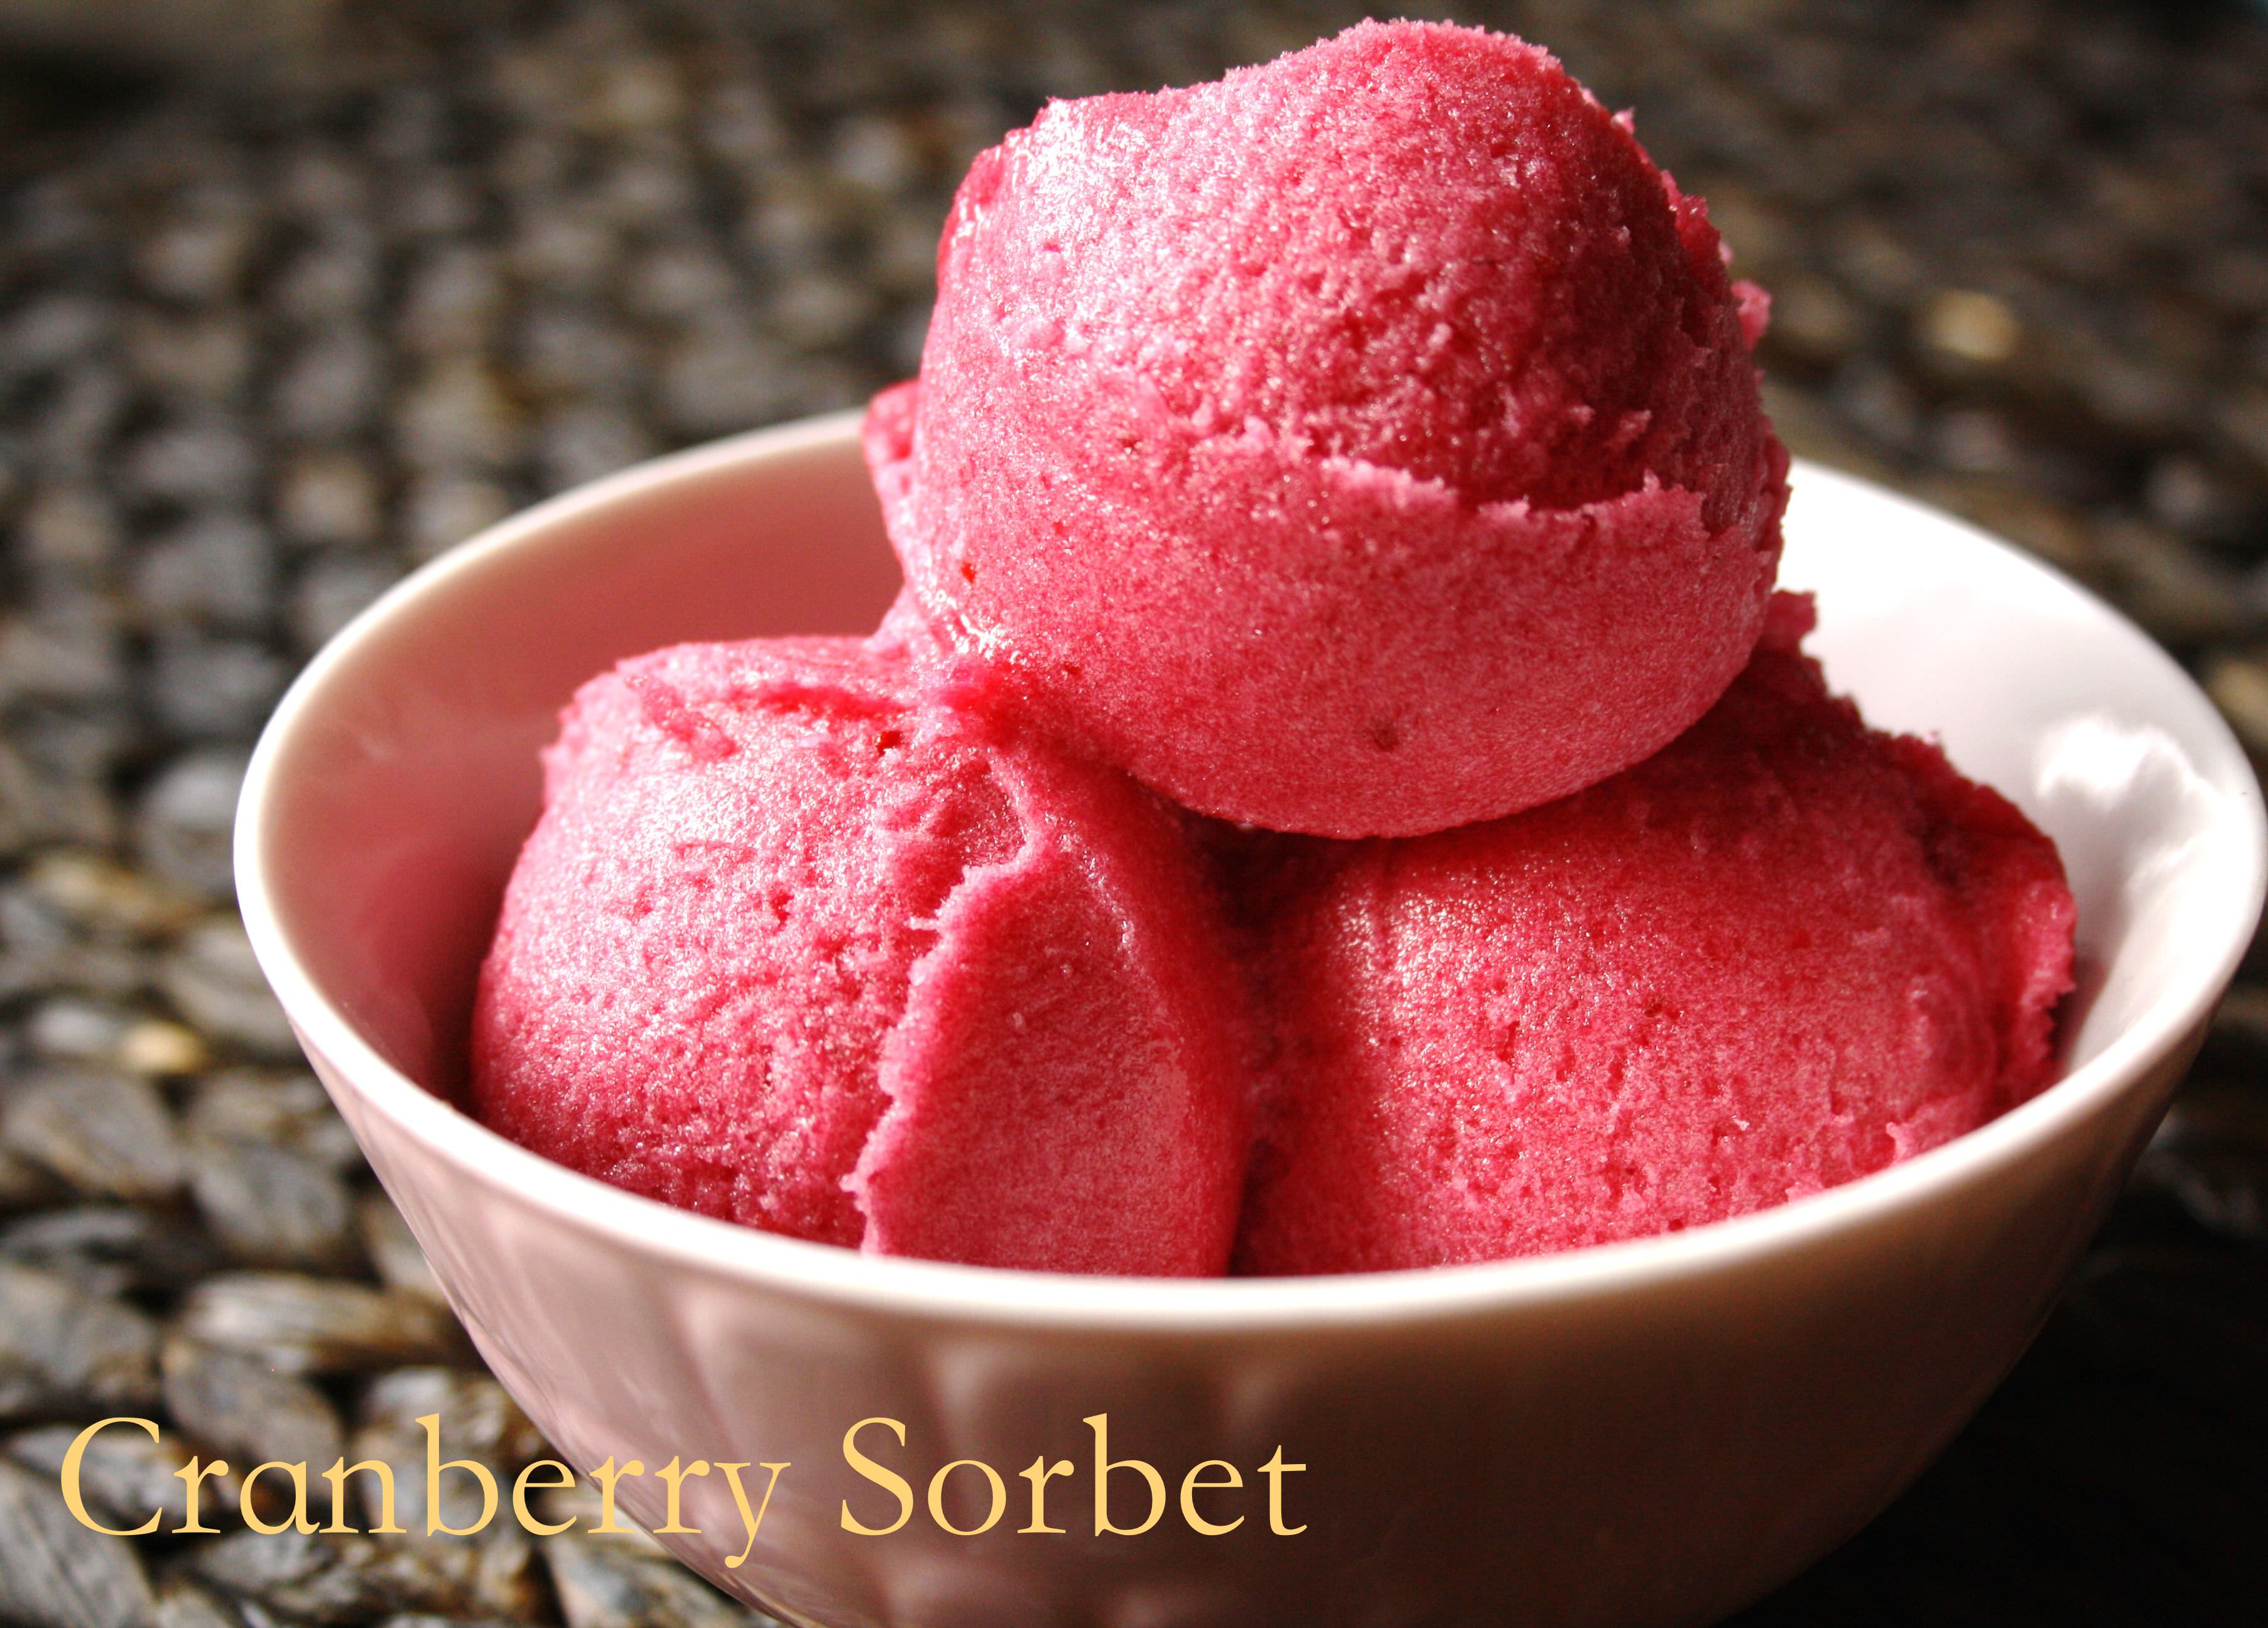 Cranberry Sorbet - Suzie The Foodie